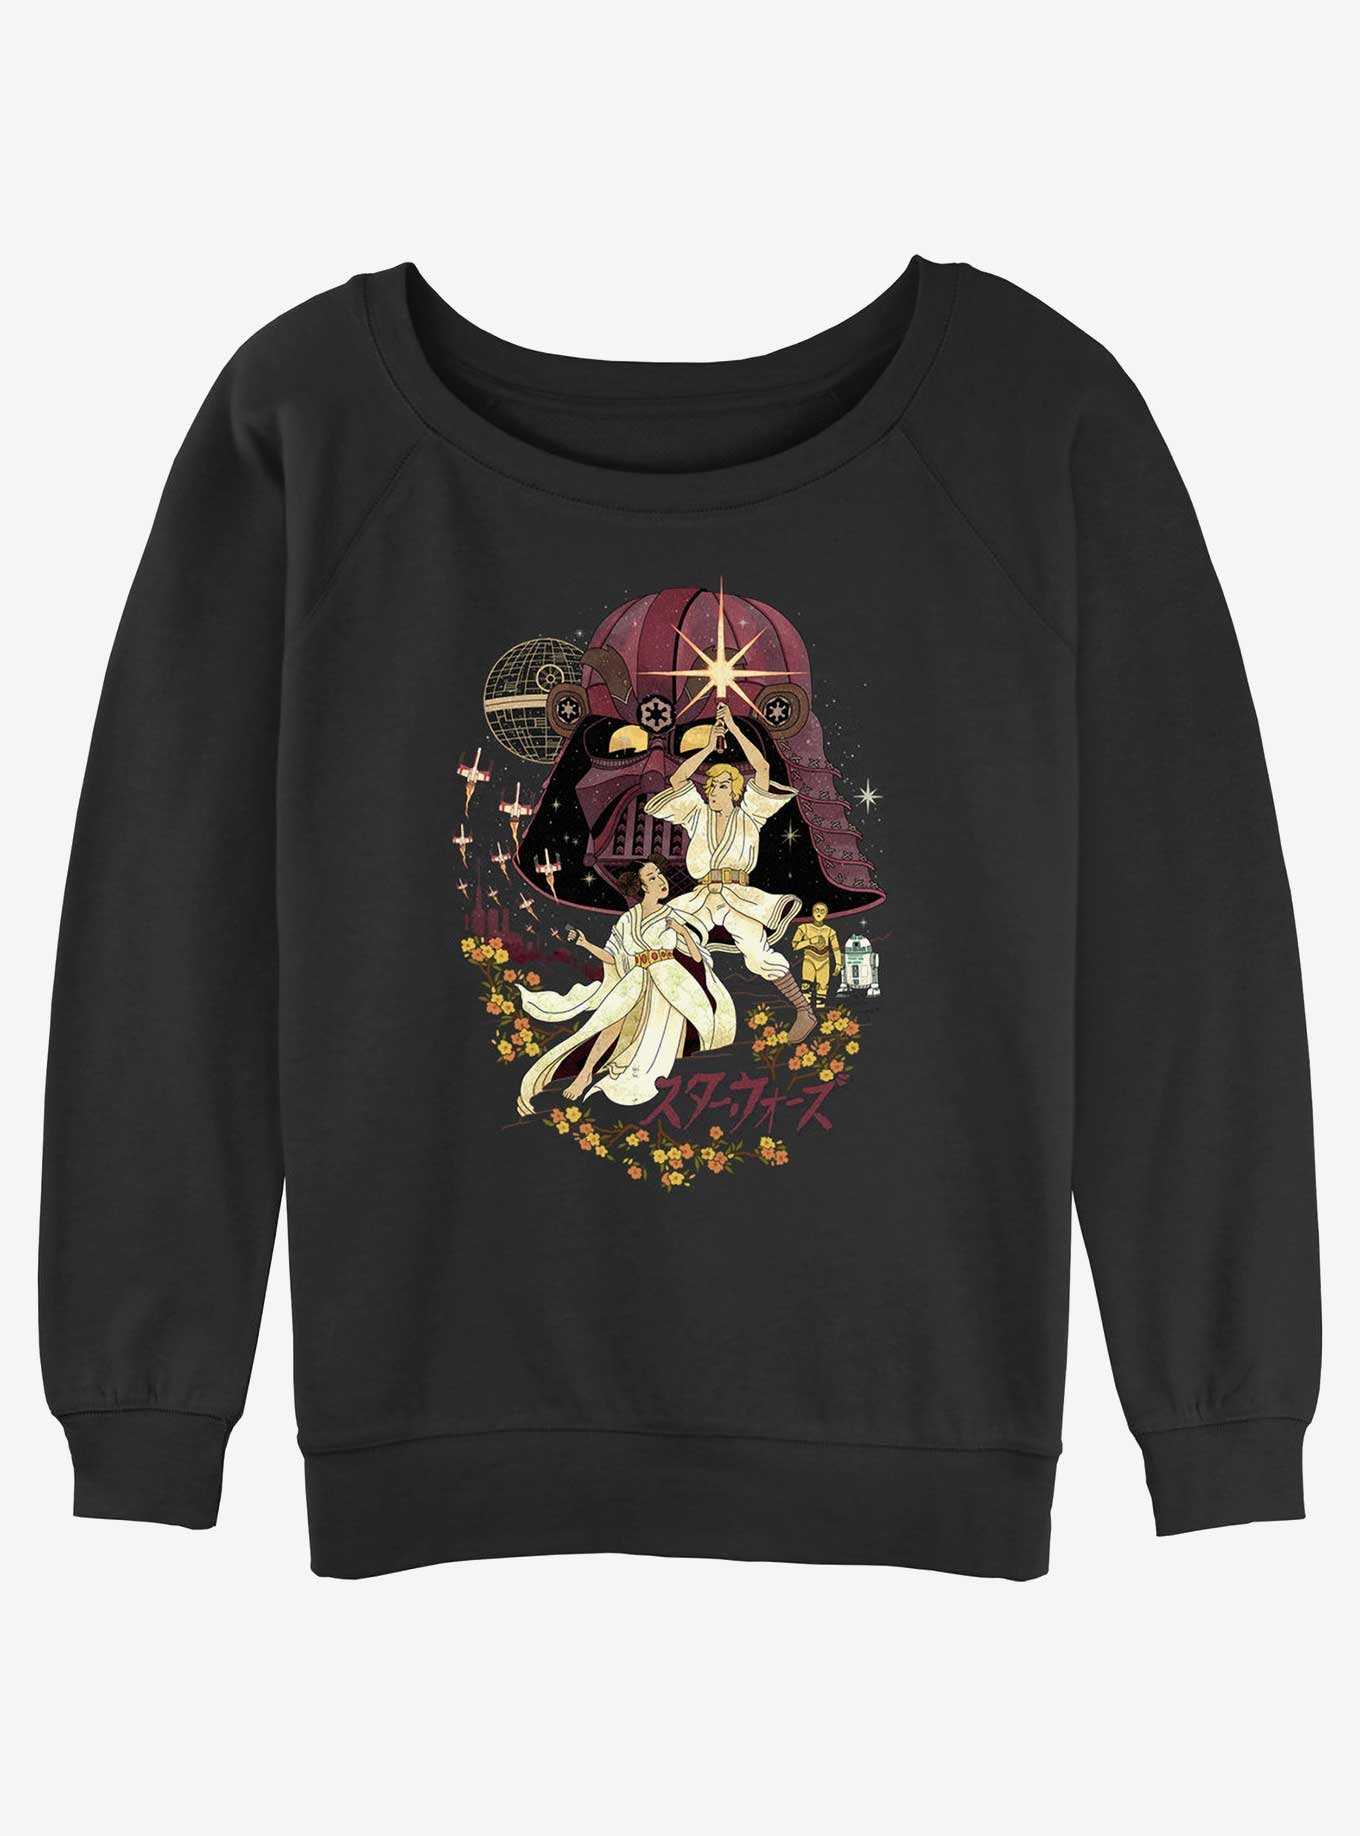 Star Wars Japanese Art Inspired Two Hopes Luke and Leia Womens Slouchy Sweatshirt, , hi-res